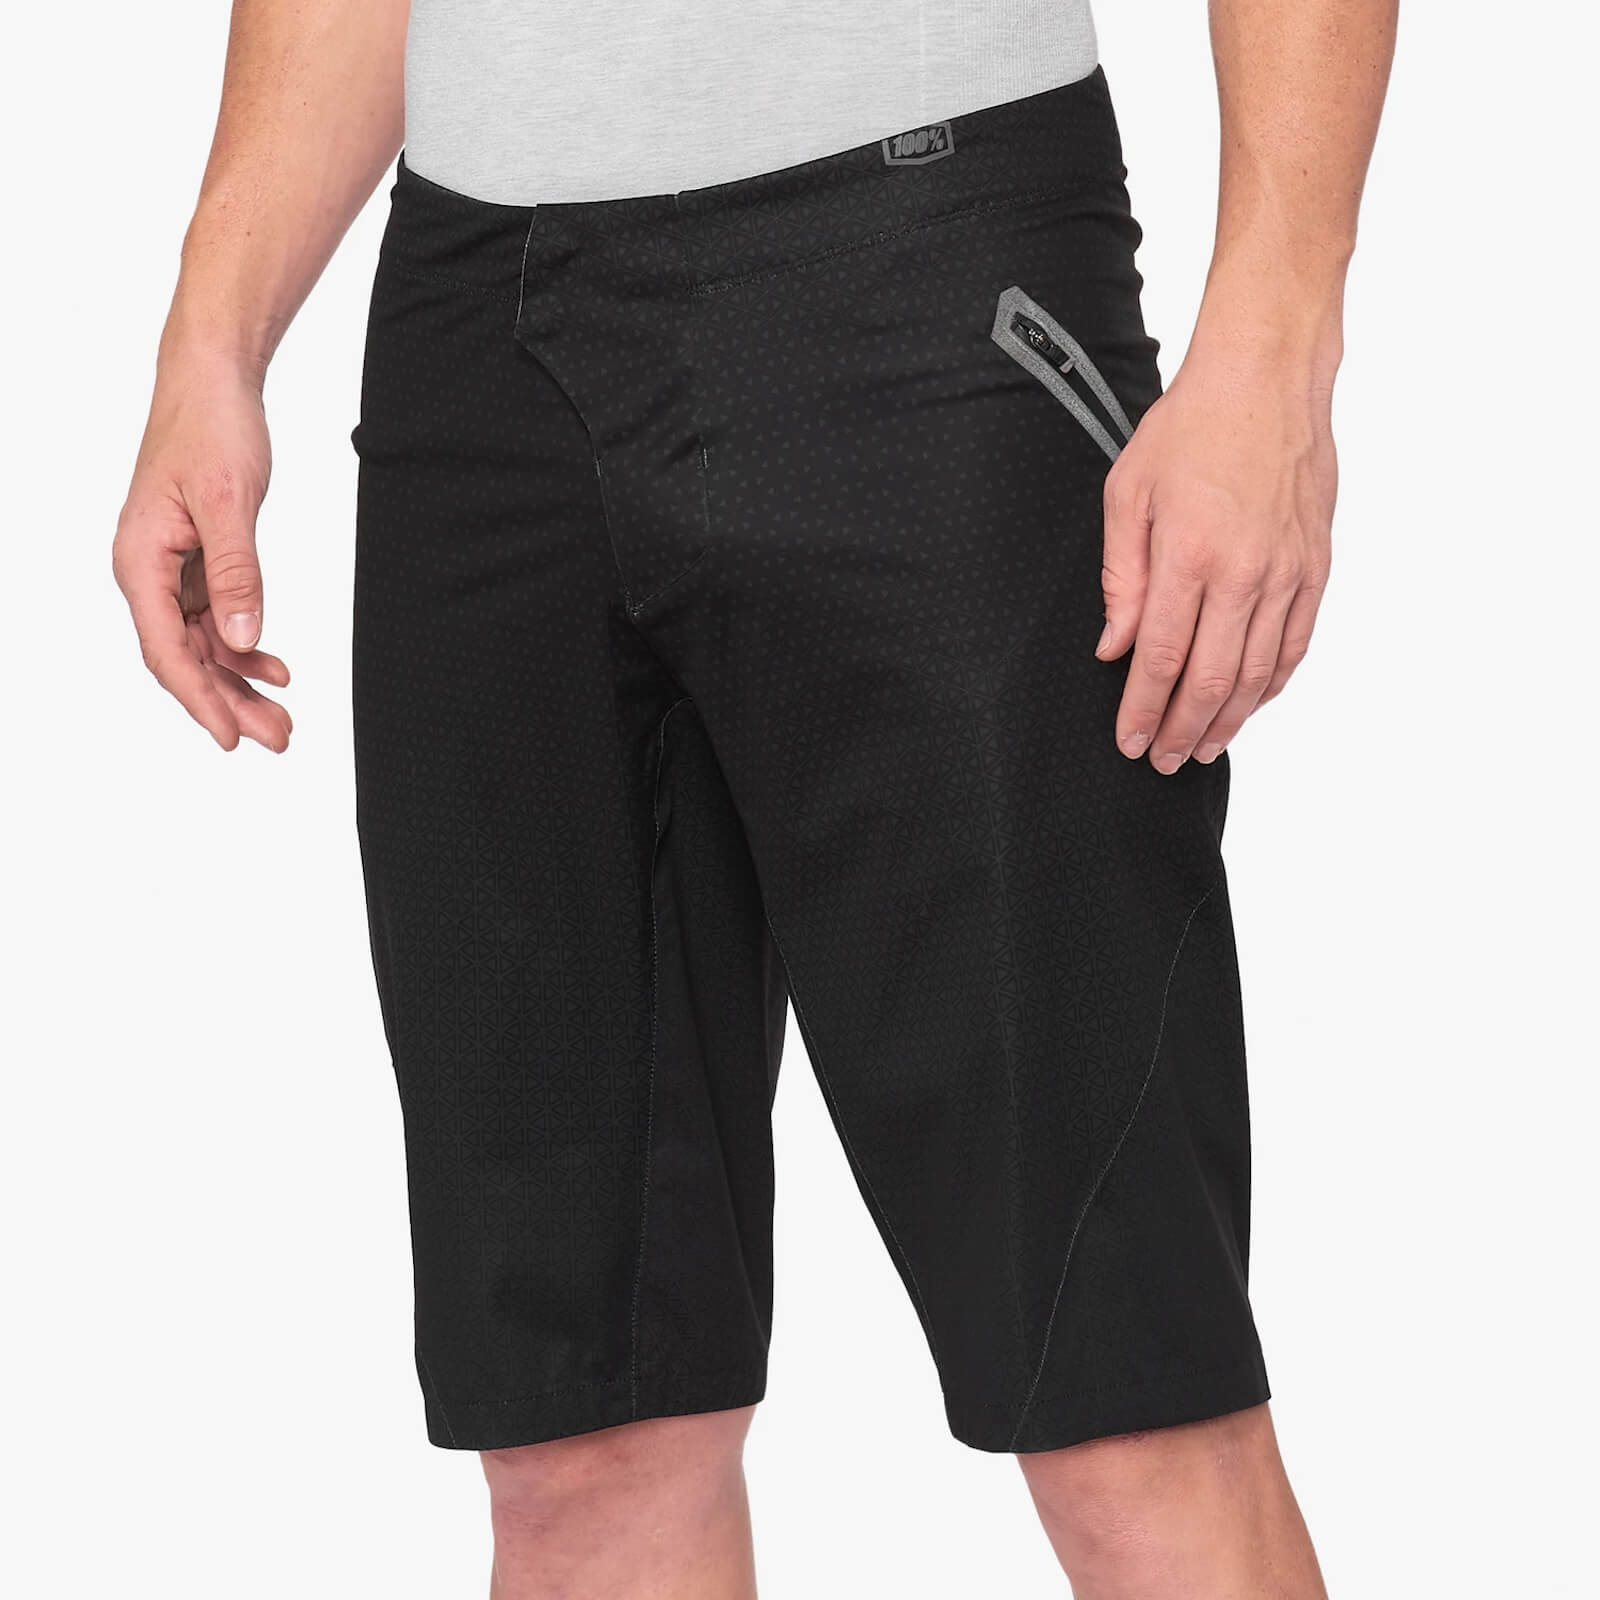 100% Hydromatic MTB Shorts - 30